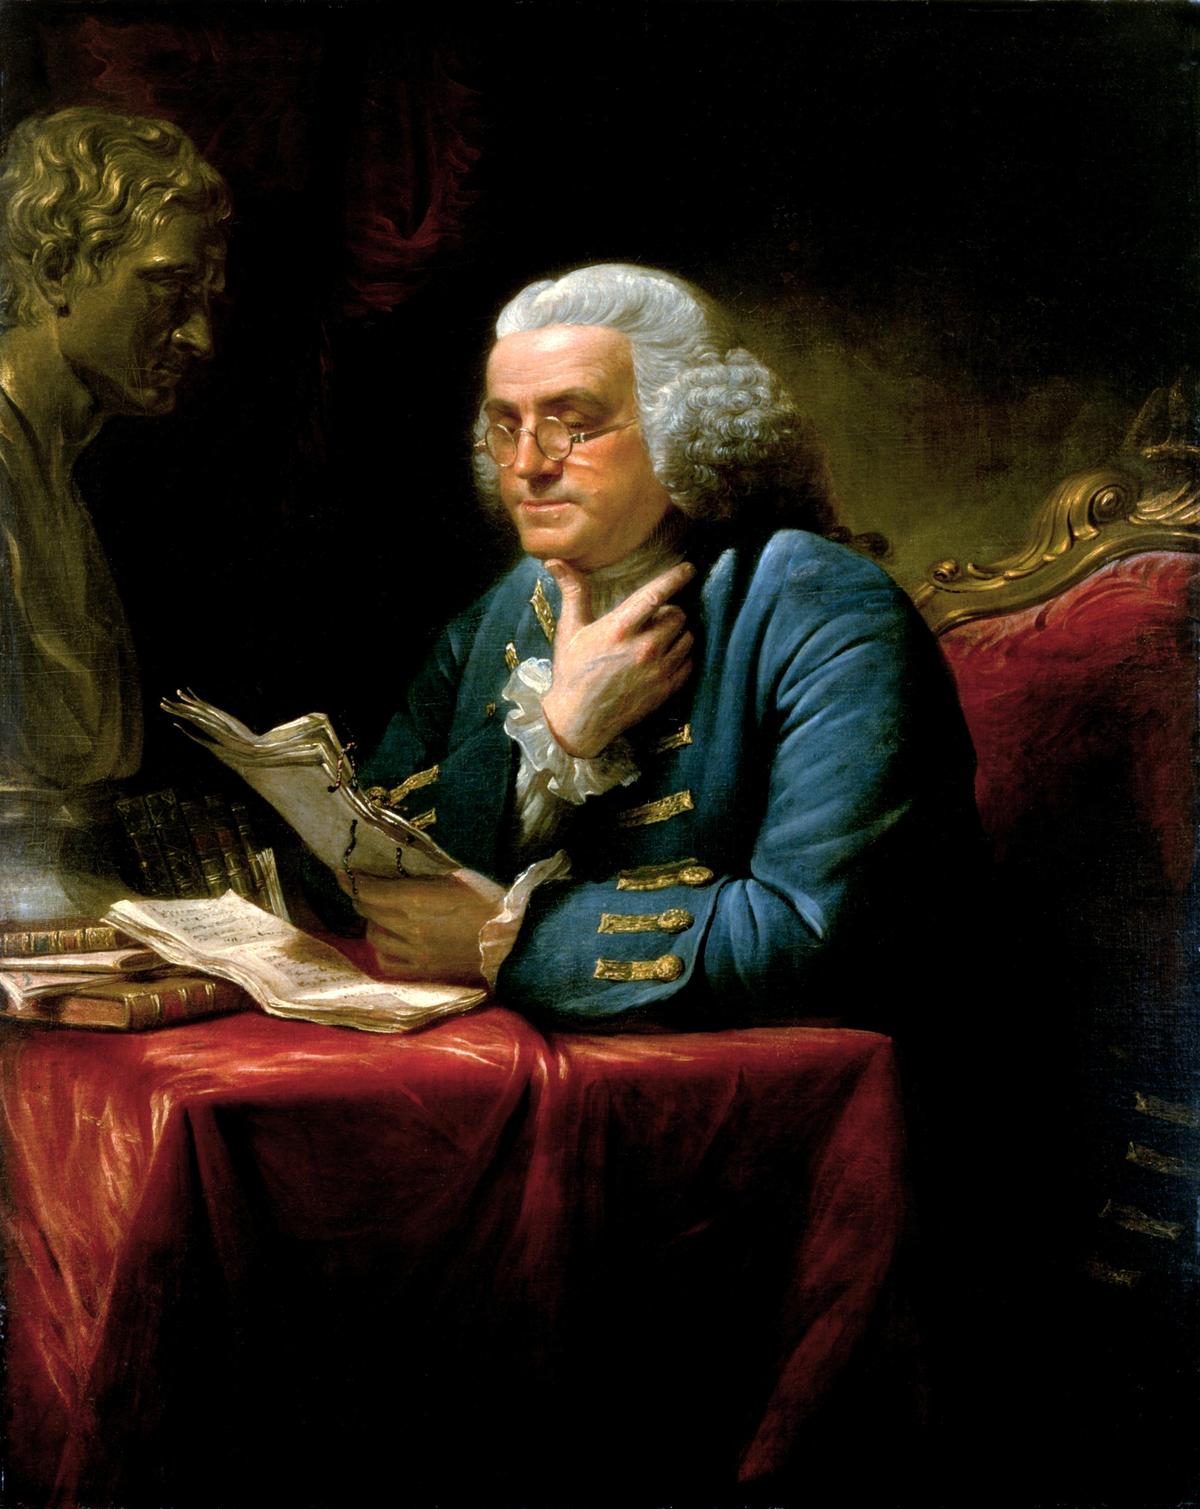 (<a href="https://commons.wikimedia.org/wiki/File:Benjamin_Franklin_1767.jpg">Public Domain</a>)